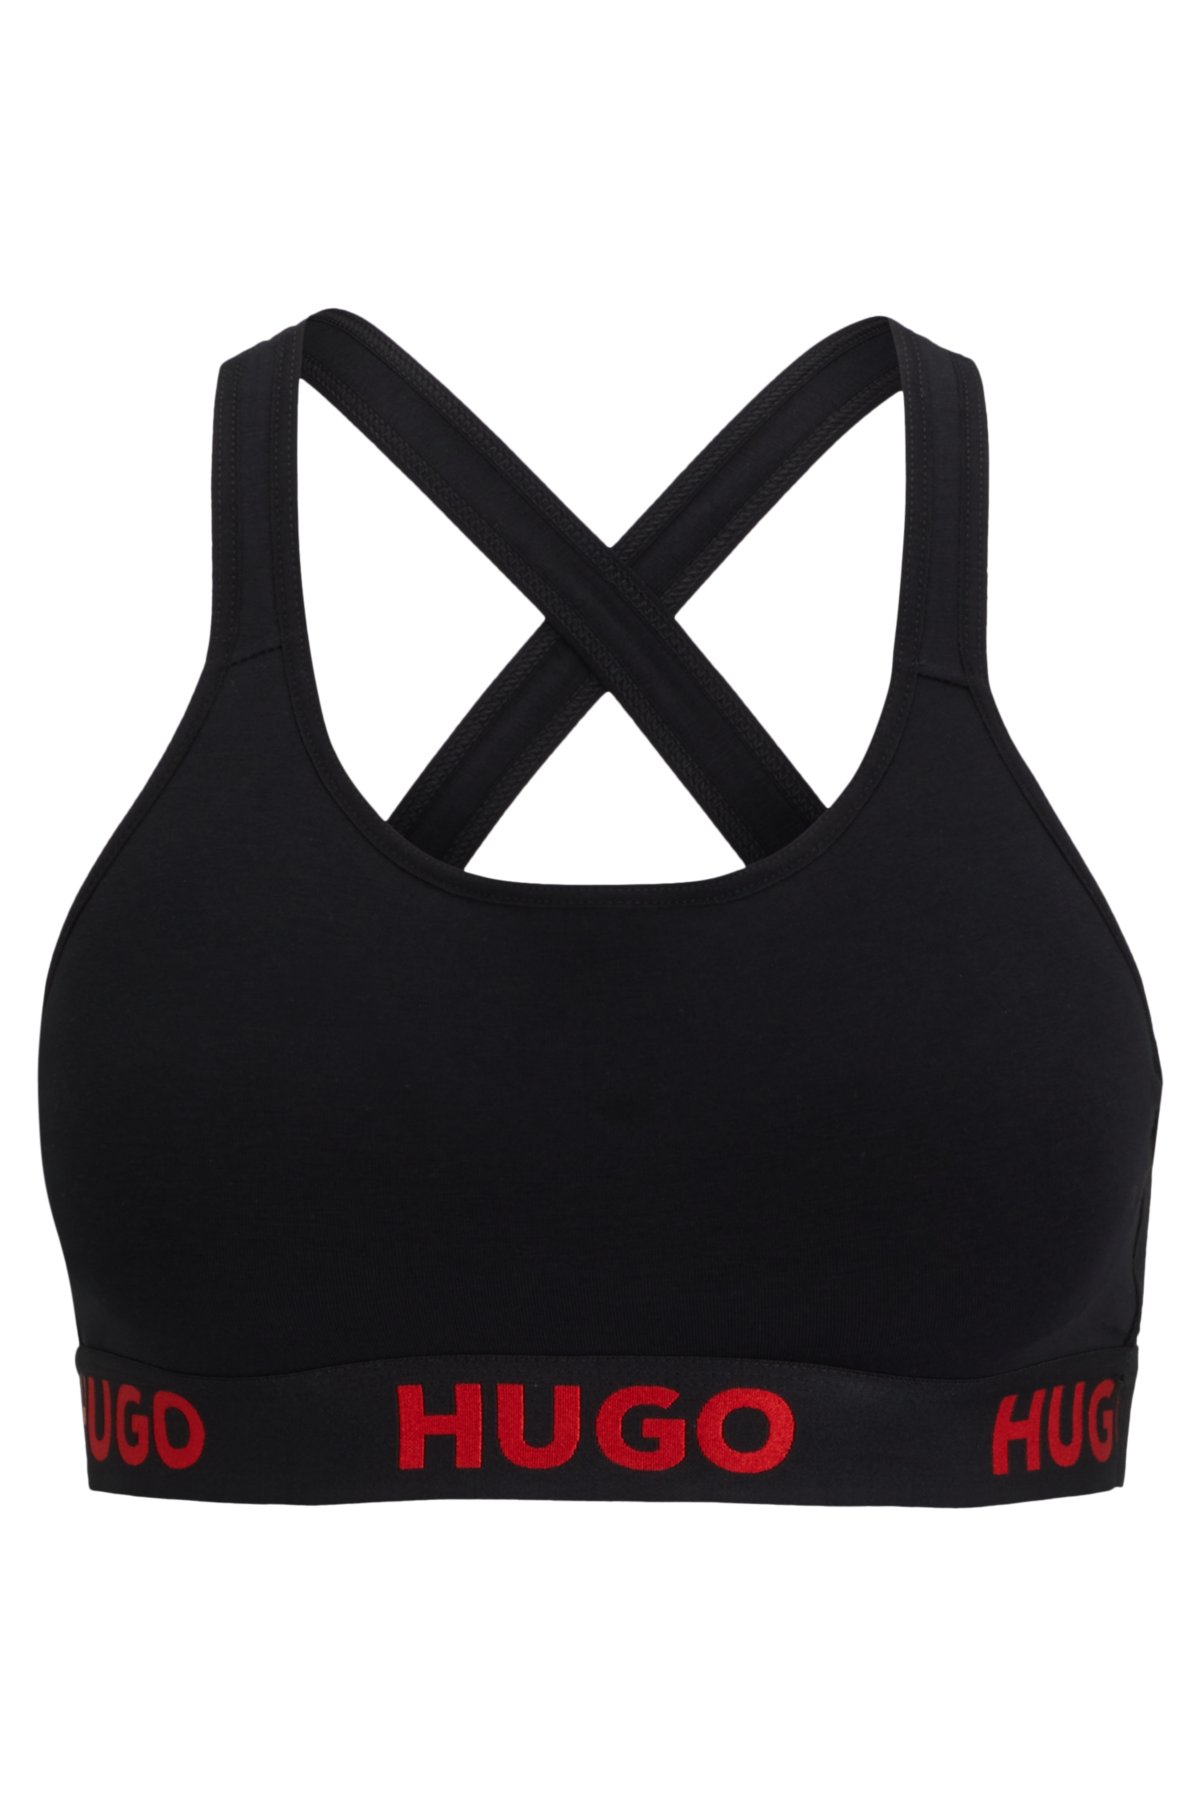 HUGO Women's Bold Logo Cotton Stretch Bralette, Black Tar, X-Small